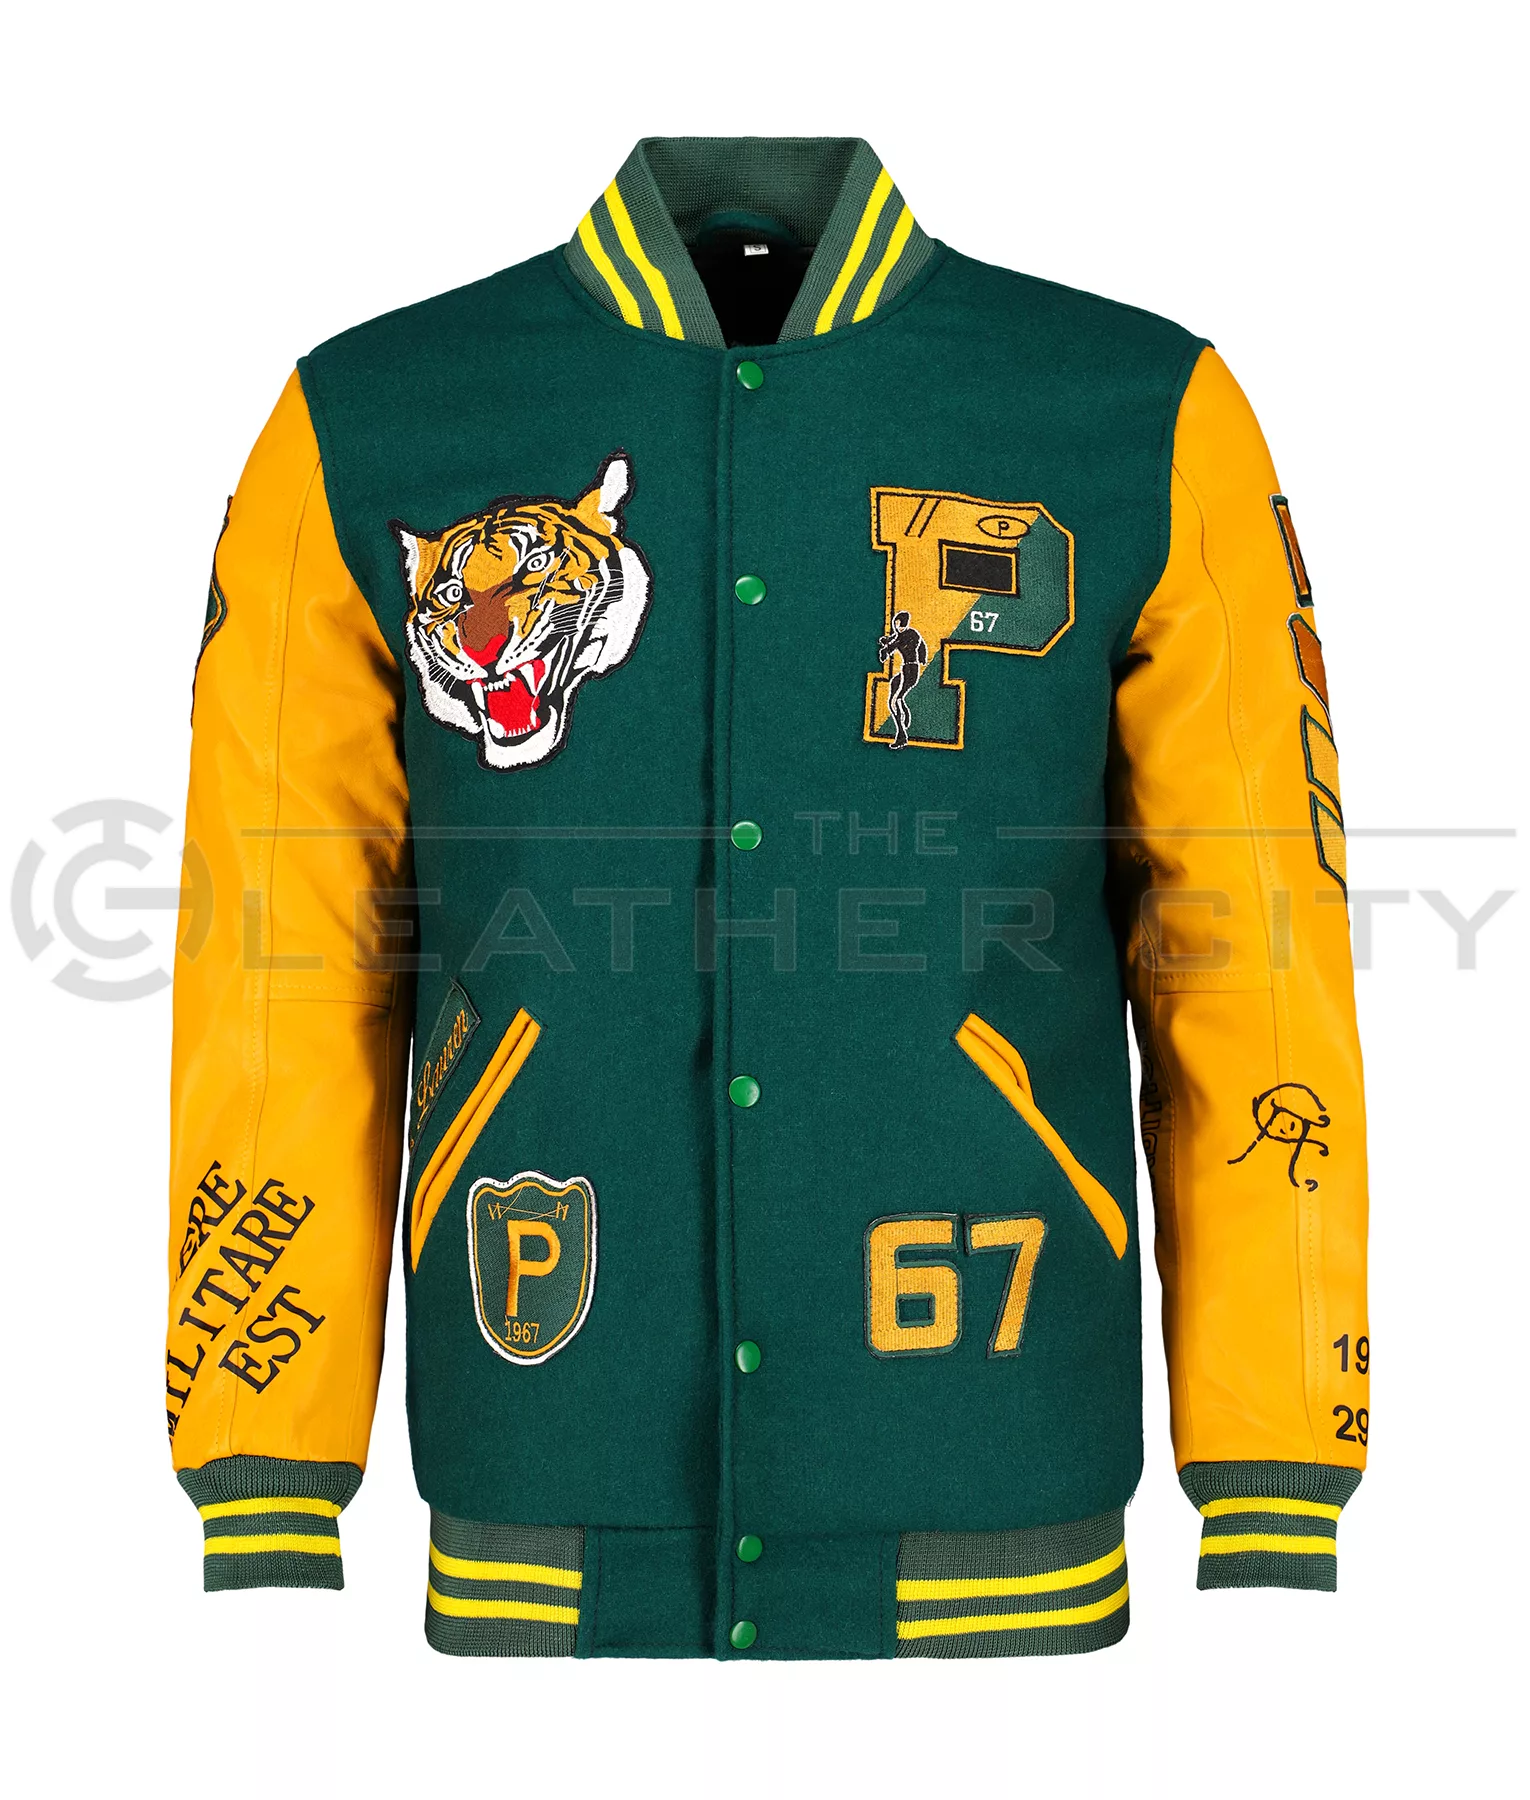 tigers baseball jacket